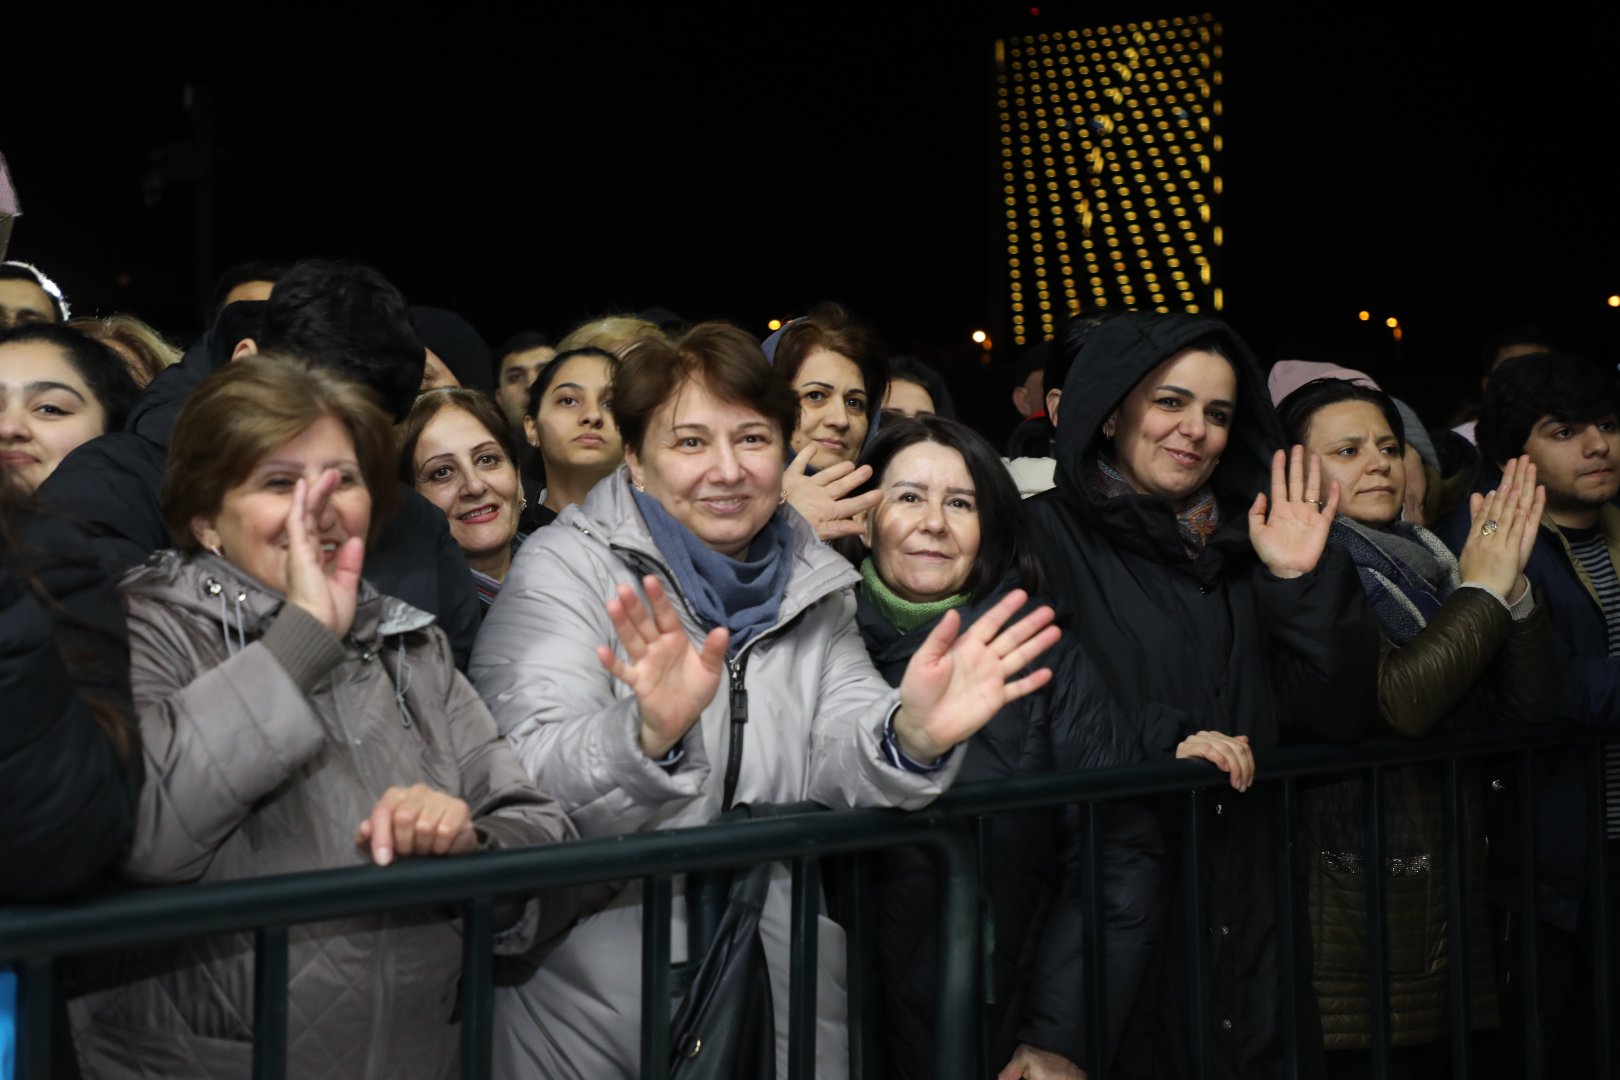 Baku locals carol election results huddling around Heydar Aliyev Center Park (PHOTO/VIDEO)